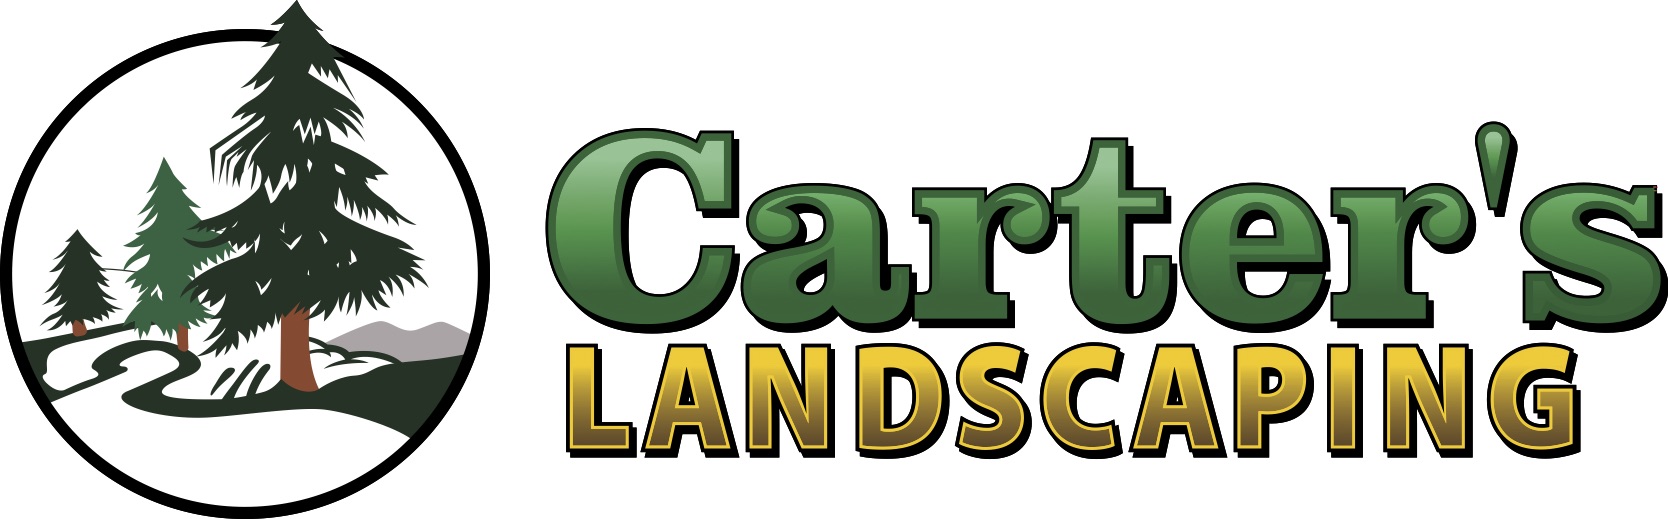 Carter's Landscaping Logo